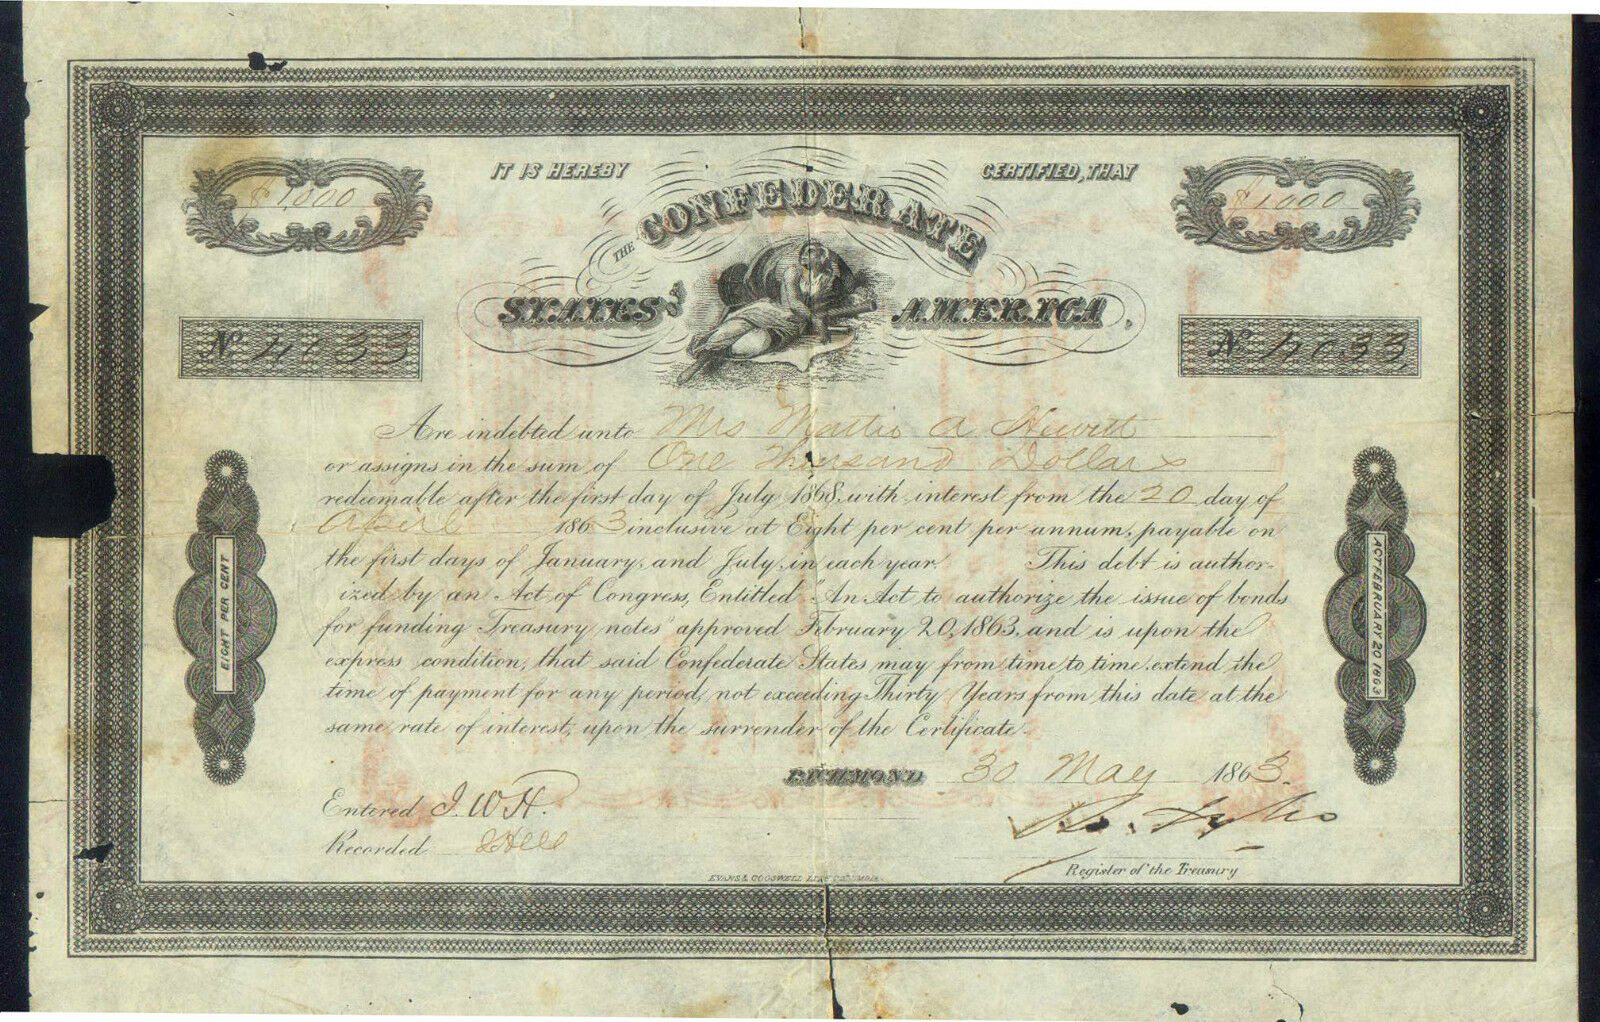 CONFEDERATE STATES of AMERICA $1000 HAND DENOMINATED STOCK 1863 SCIENCE # 4033